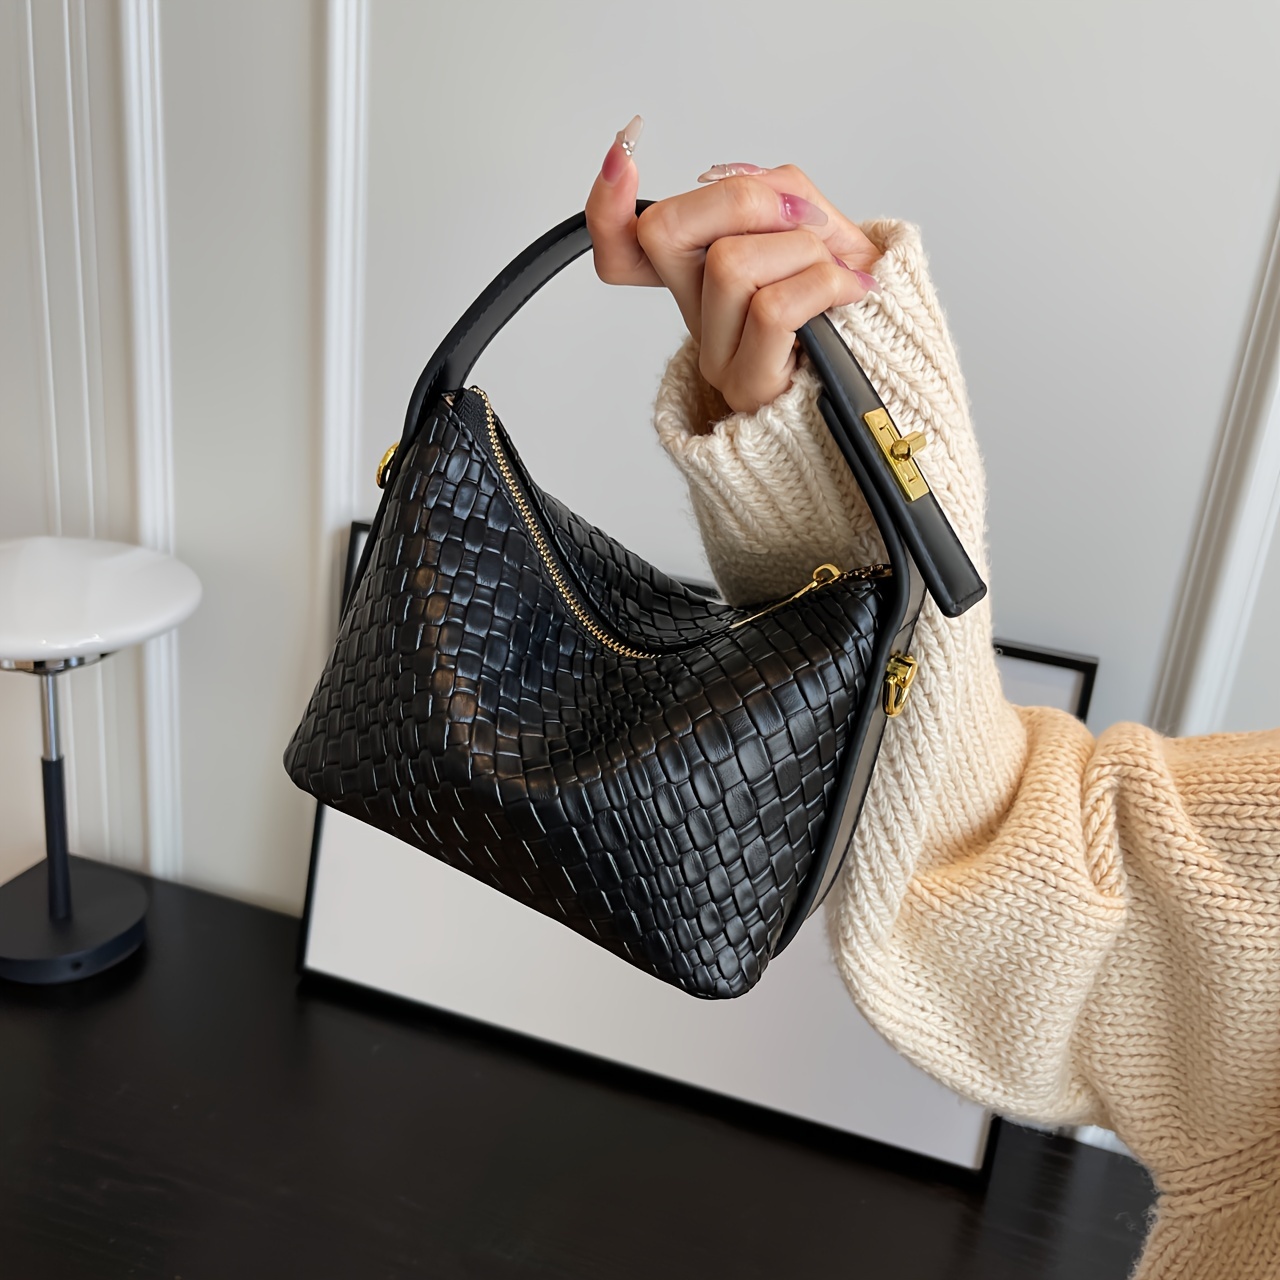 

Elegant Braided Handbag, Versatile Solid Color Fashion Accessory With Golden Accents, Stylish Crossbody Bag